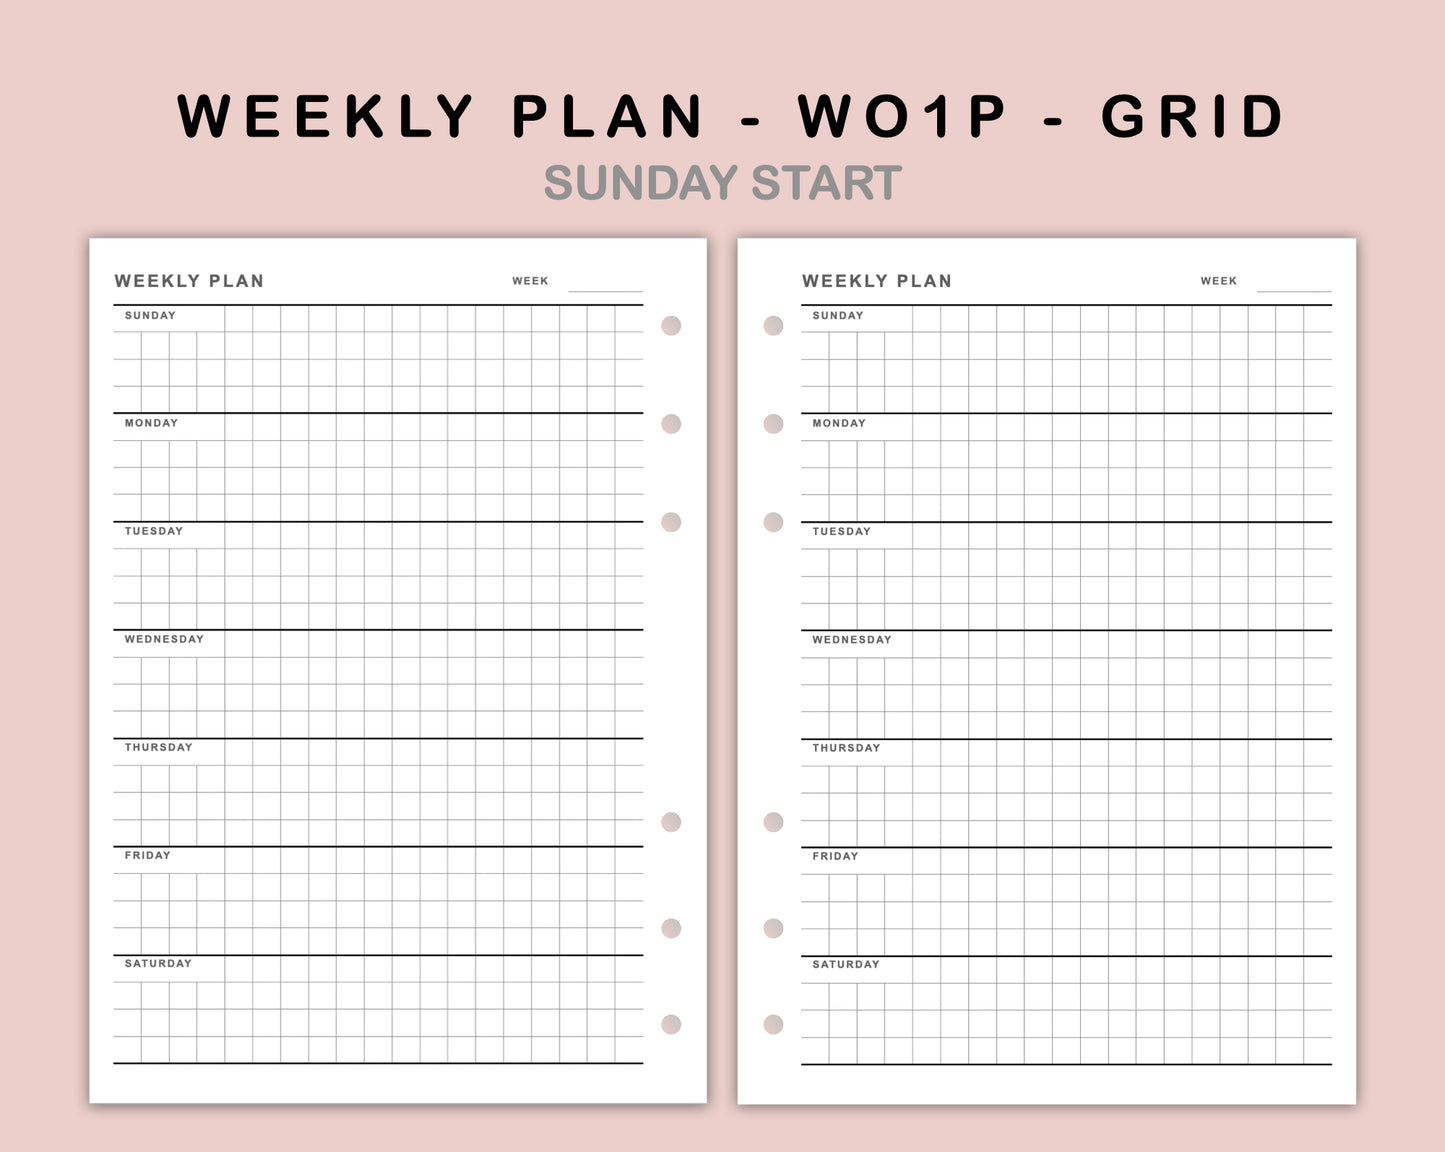 B6 Inserts - Weekly Plan - WO1P - Grid